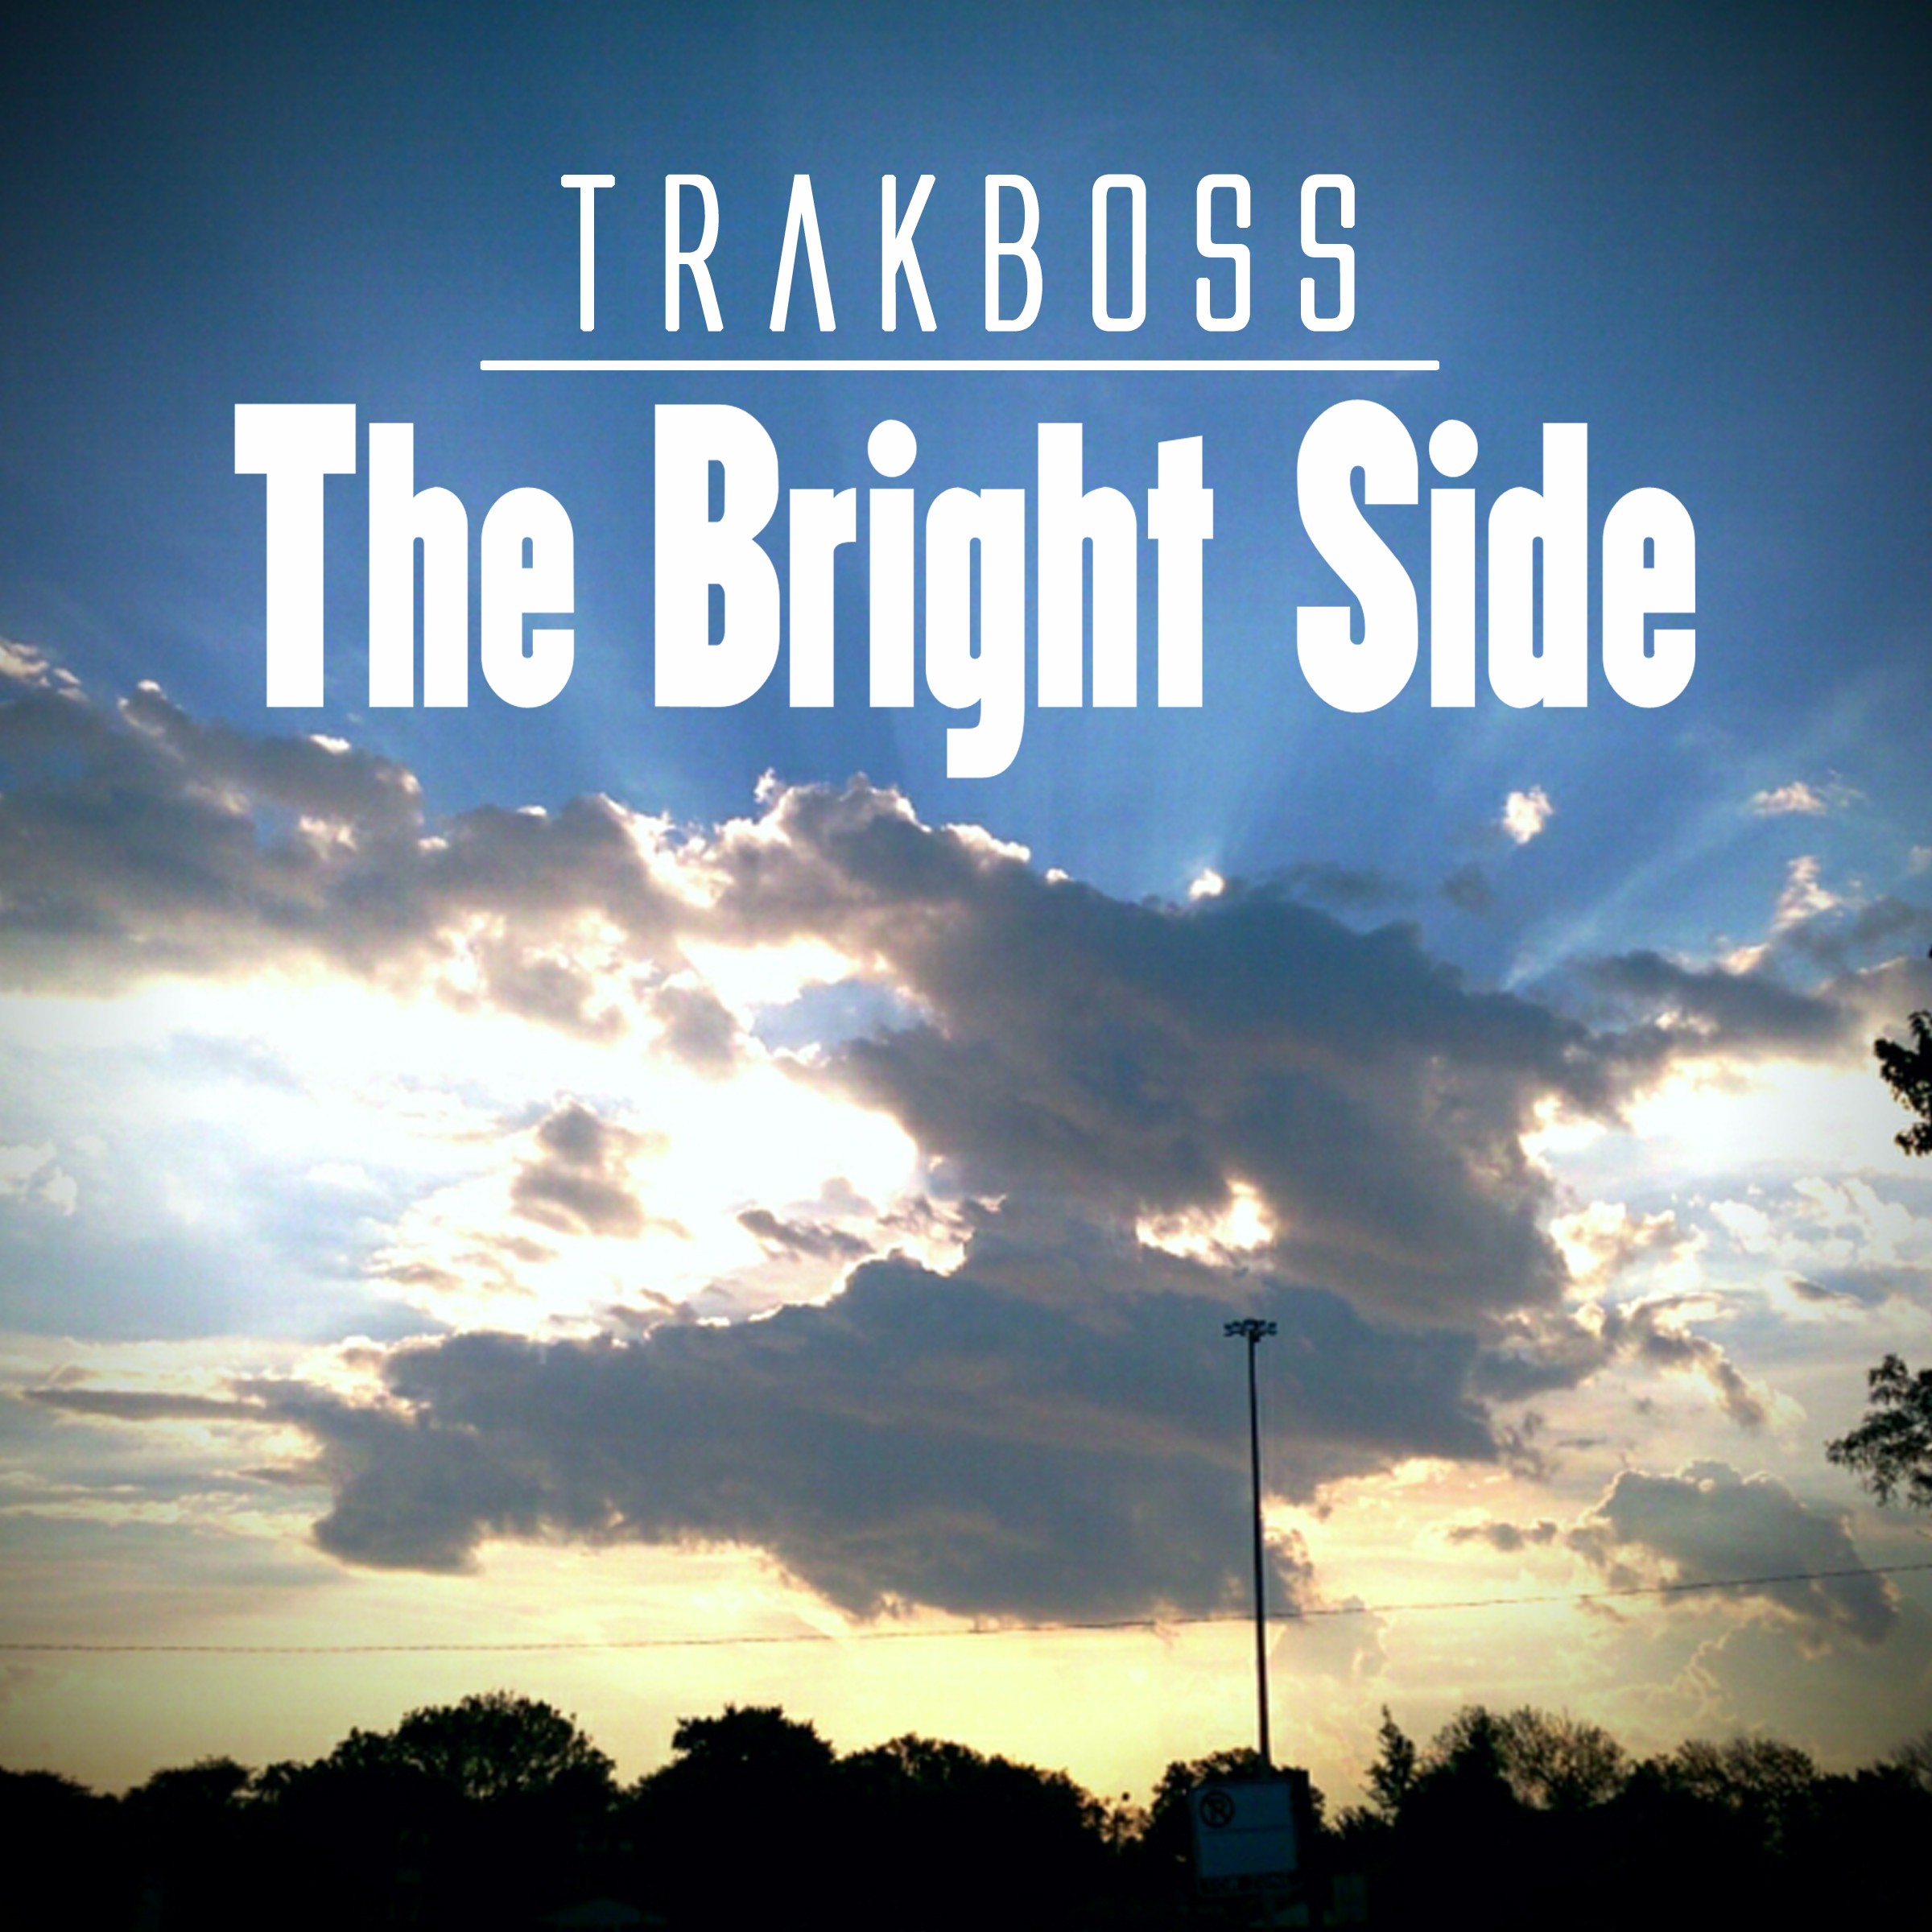 TrakBoss – The Bright Side